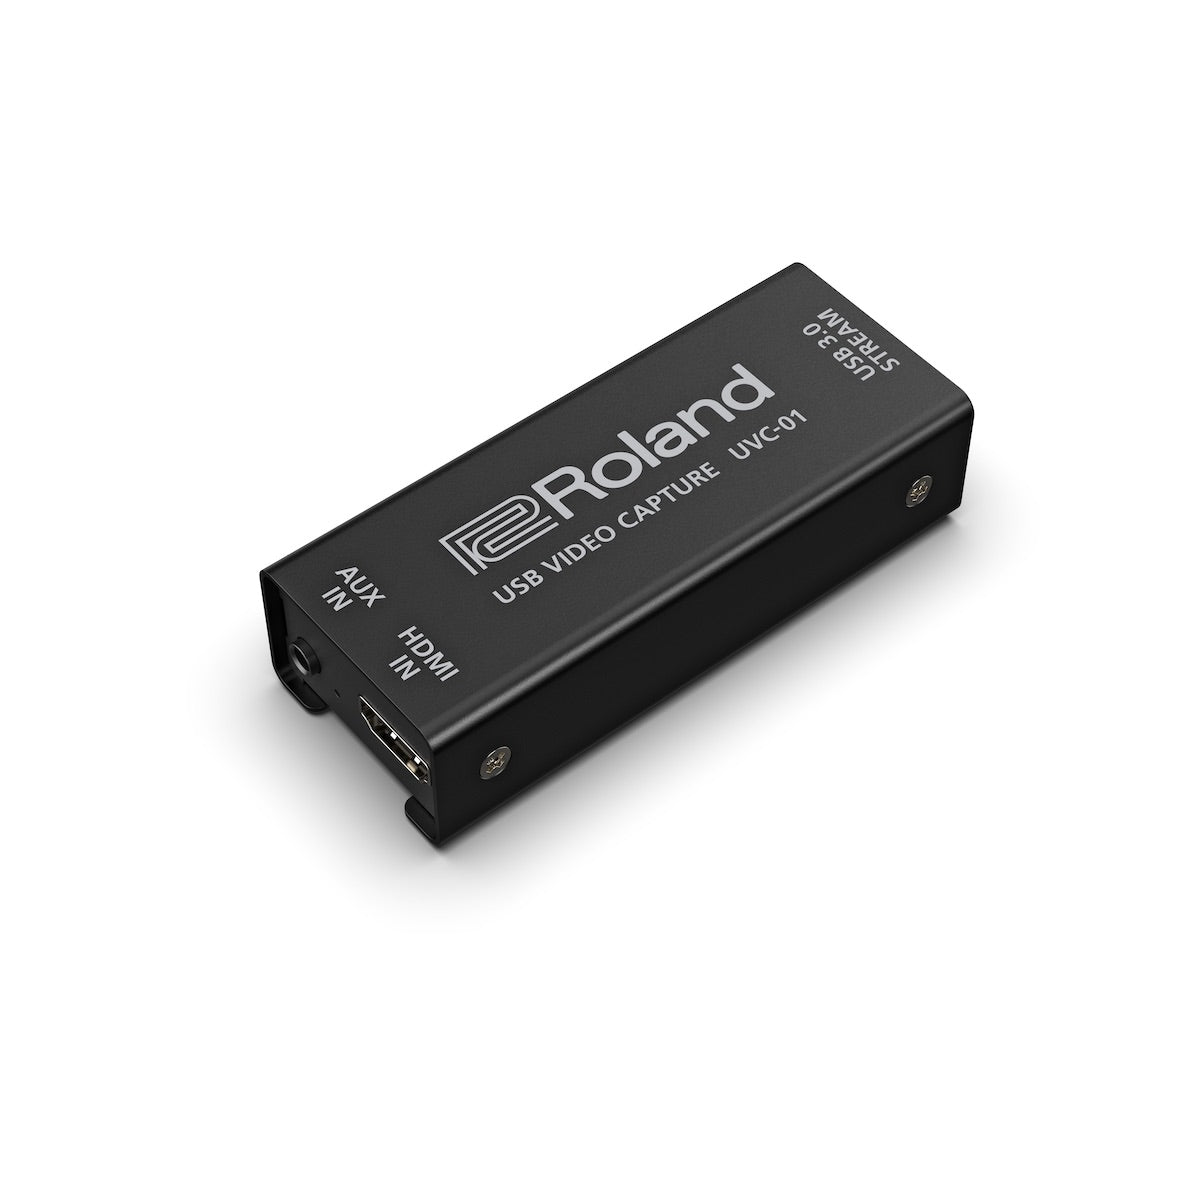 Roland UVC-01 - USB Video Capture/Encoder Device